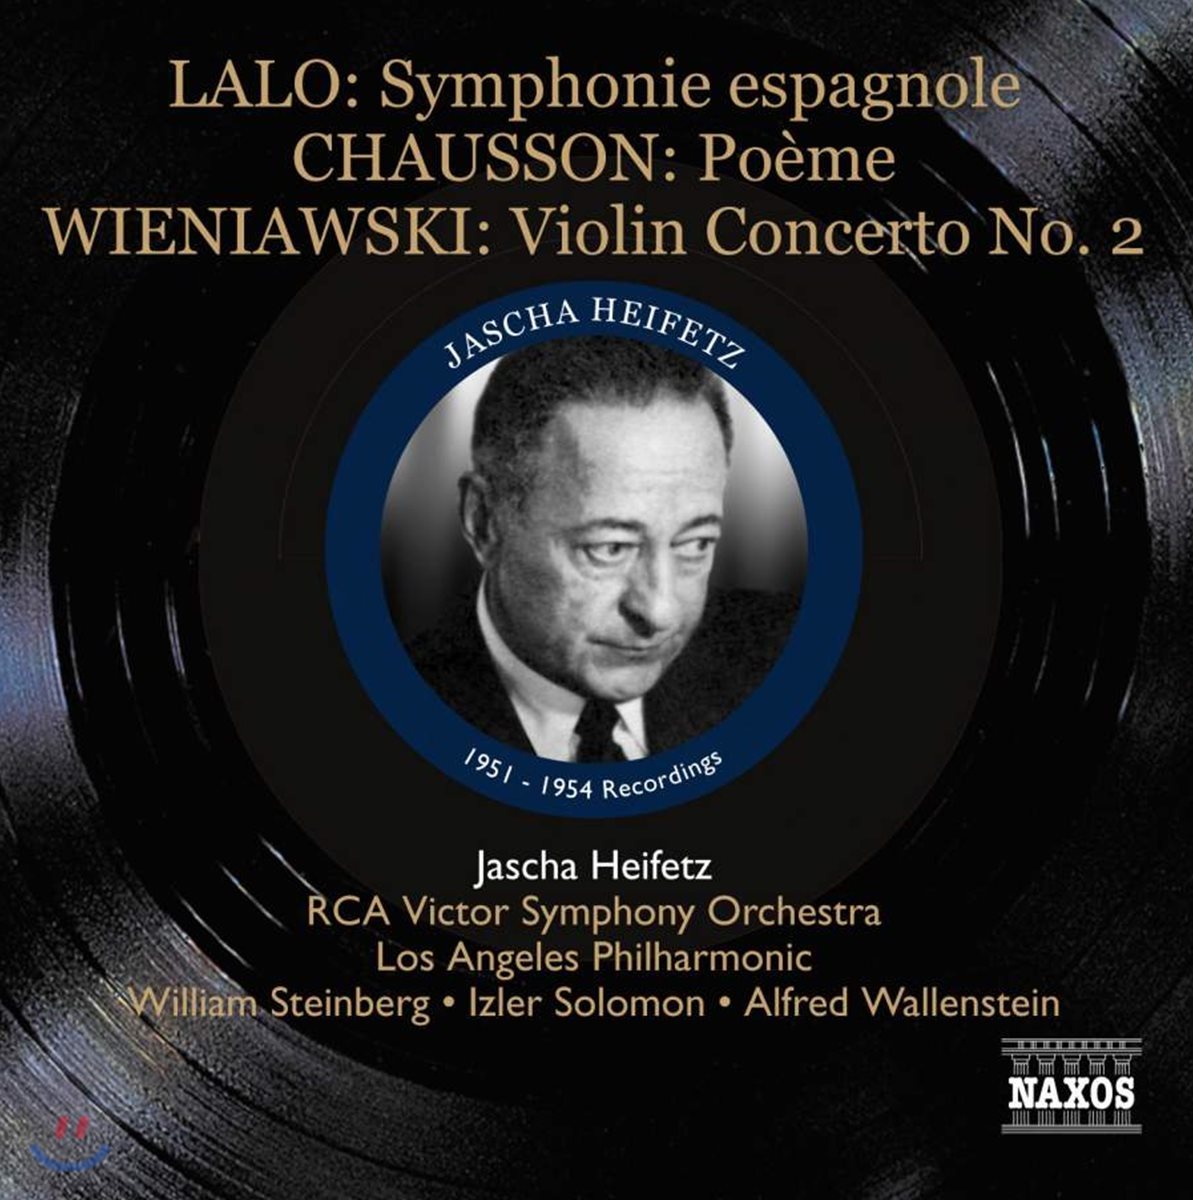 Jascha Heifetz 랄로: 스페인 교향곡 / 비에냐프스키: 바이올린 협주곡 2번 / 쇼숑: 시곡 / 생상스: 서주와 론도 카프리치오소